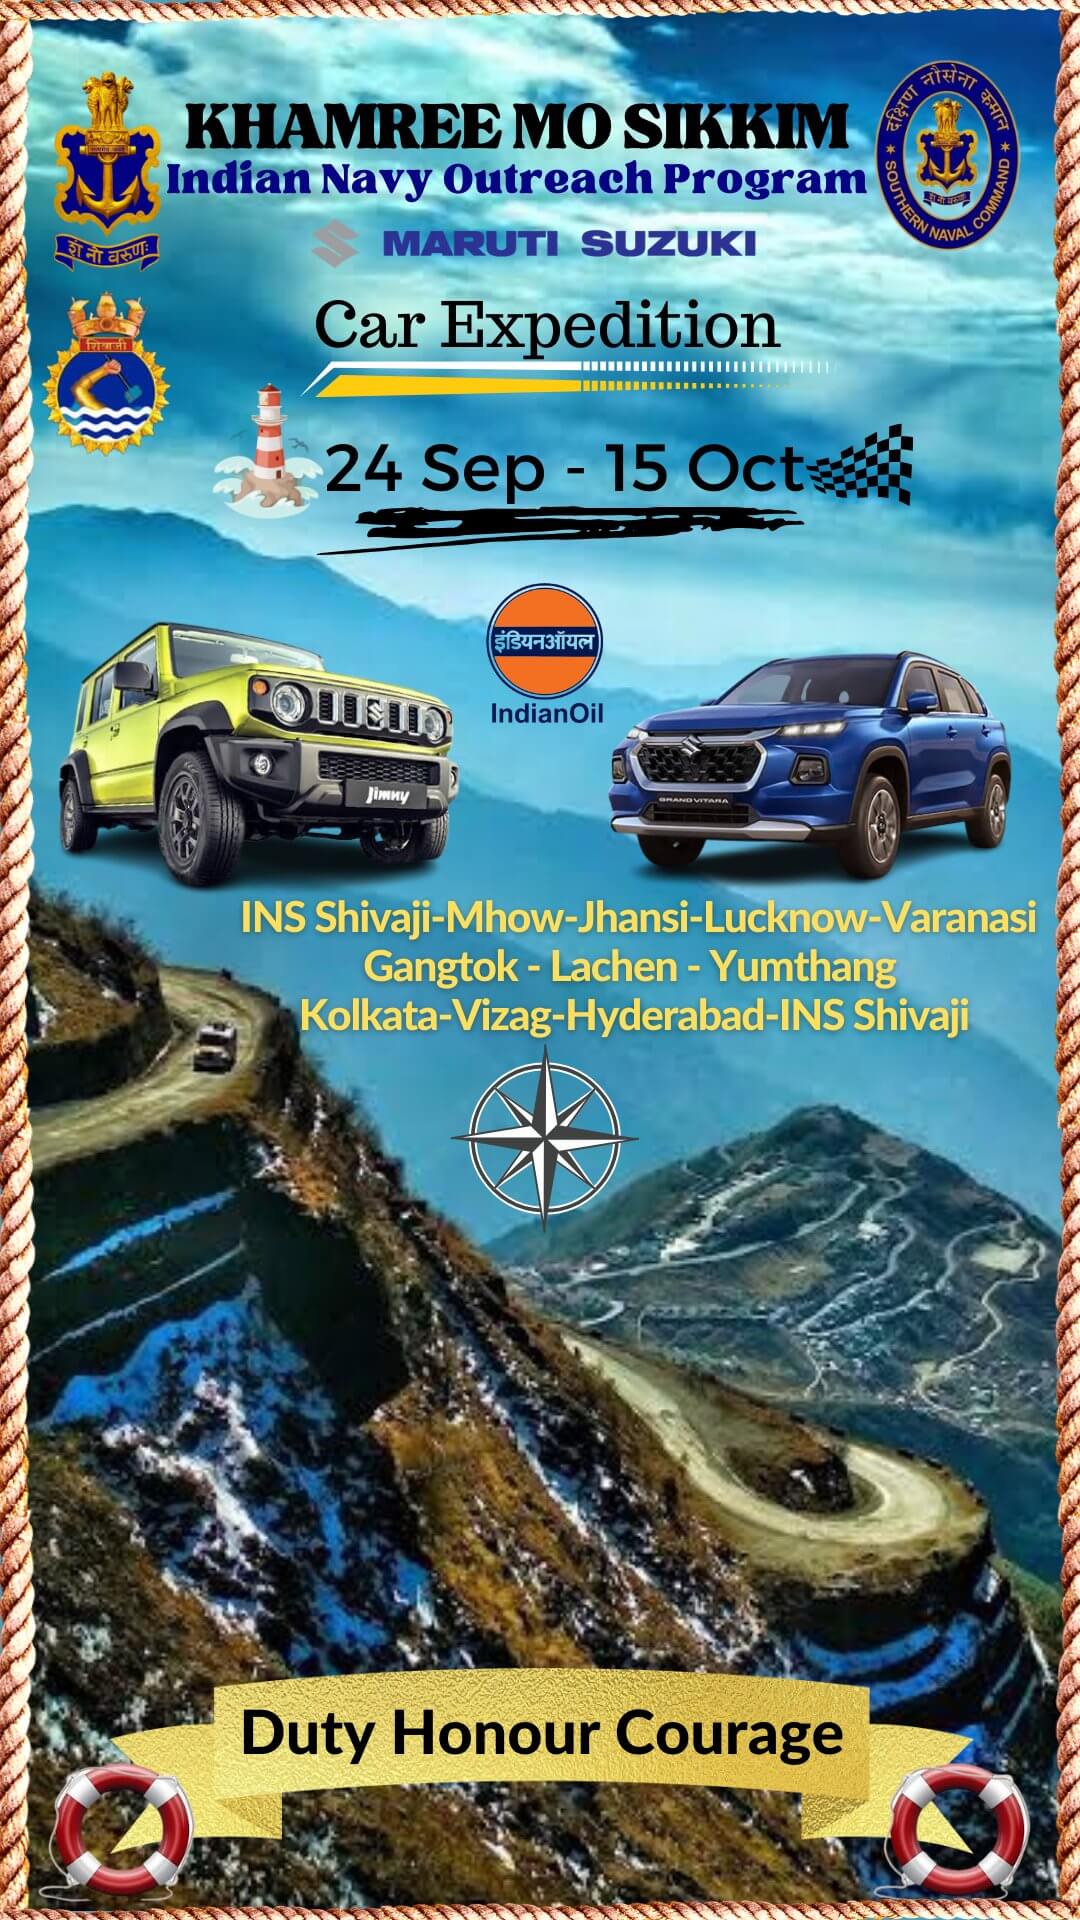 Motor Car Expedition, Khamree Mo Sikkim! (Hello Sikkim) from INS Shivaji